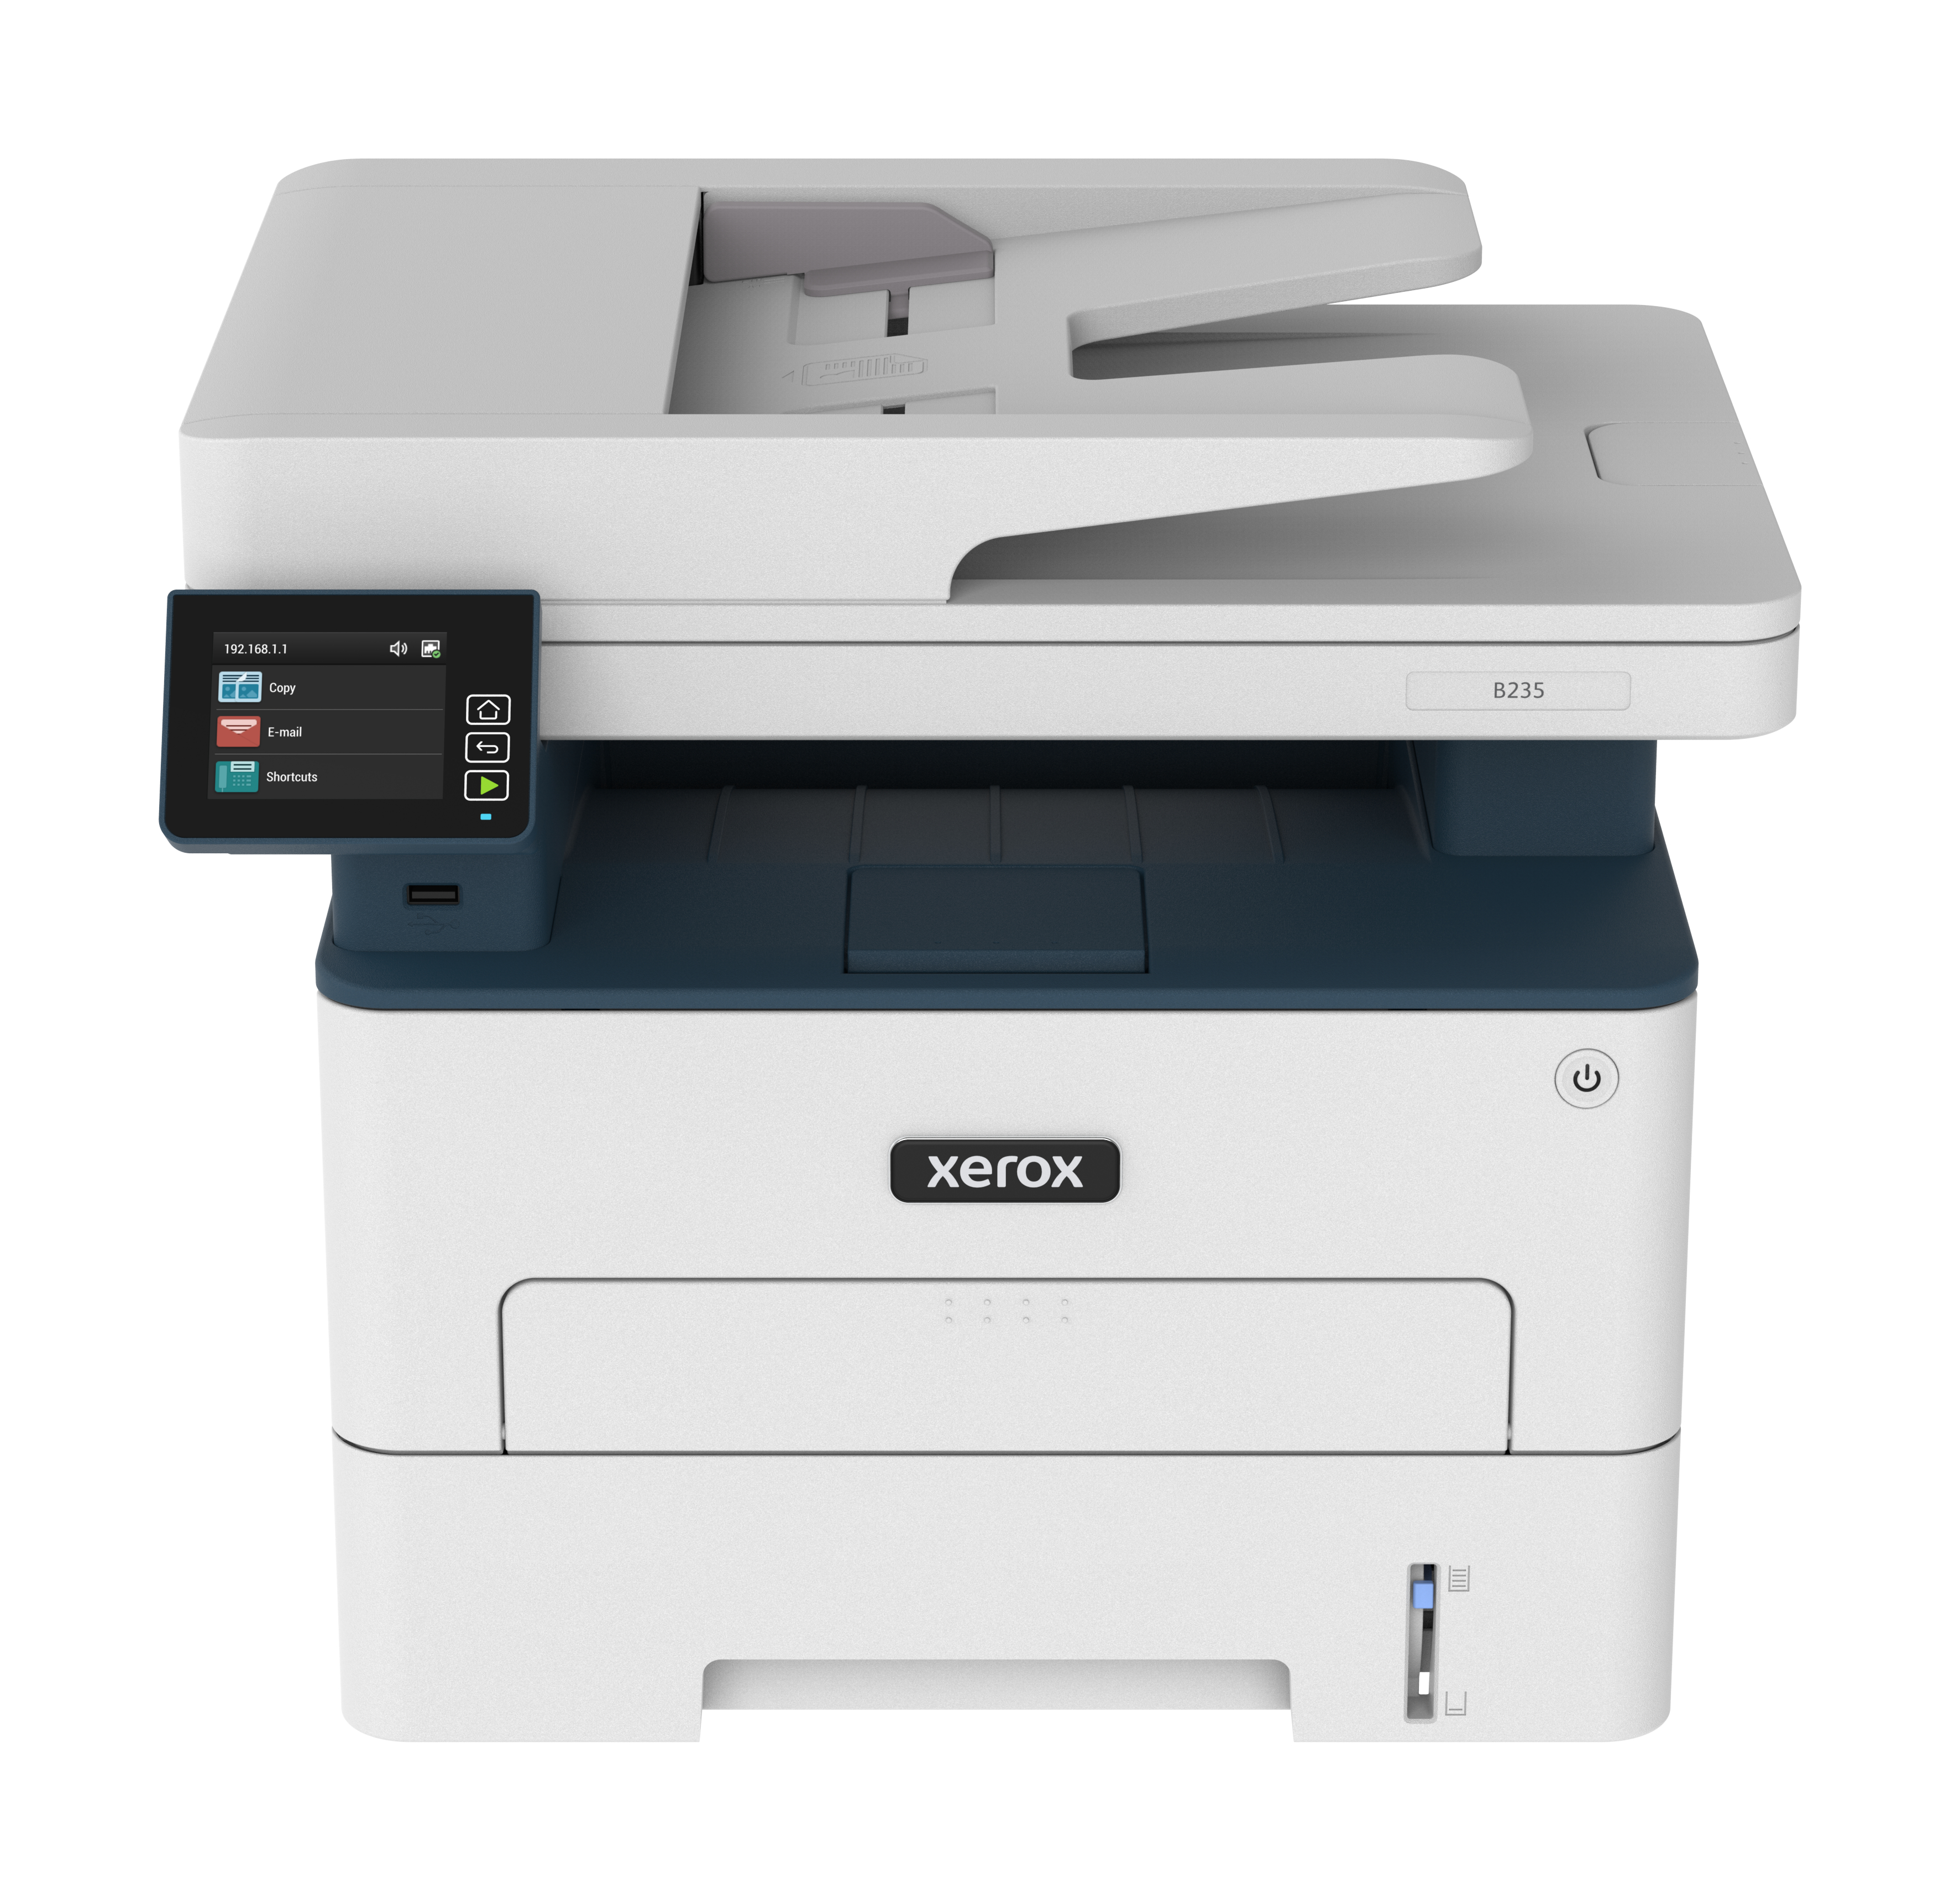 Notre imprimante multifonction B235 monochrome - Xerox